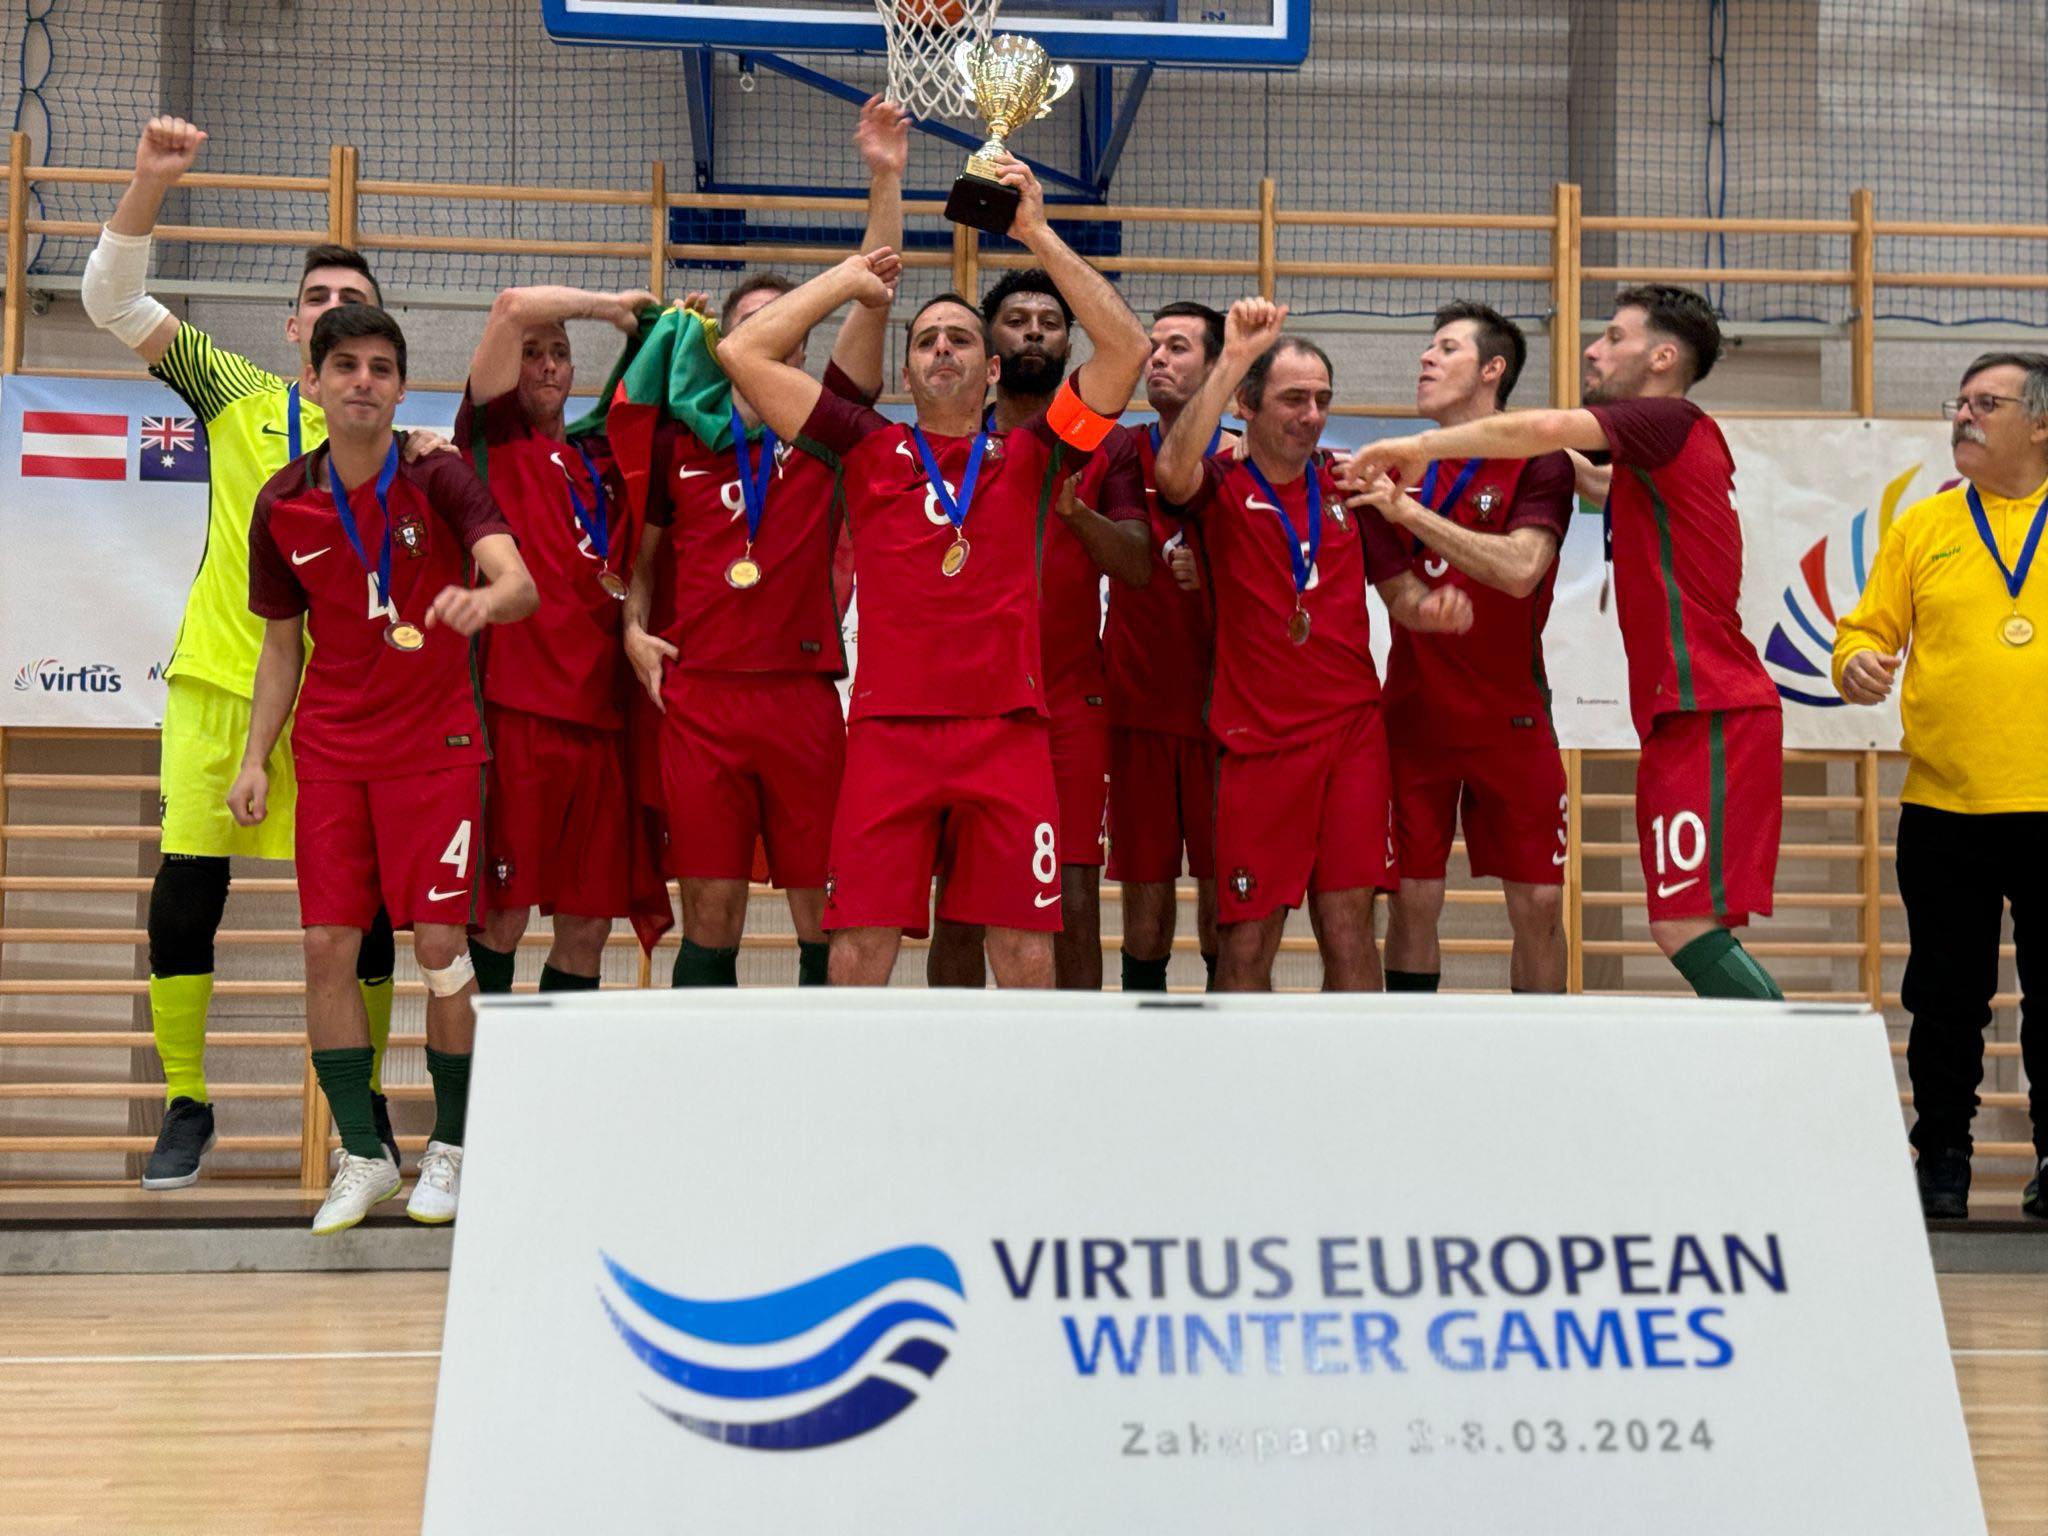 4 Micaelenses Campeões Europeus de Futsal Adaptado!